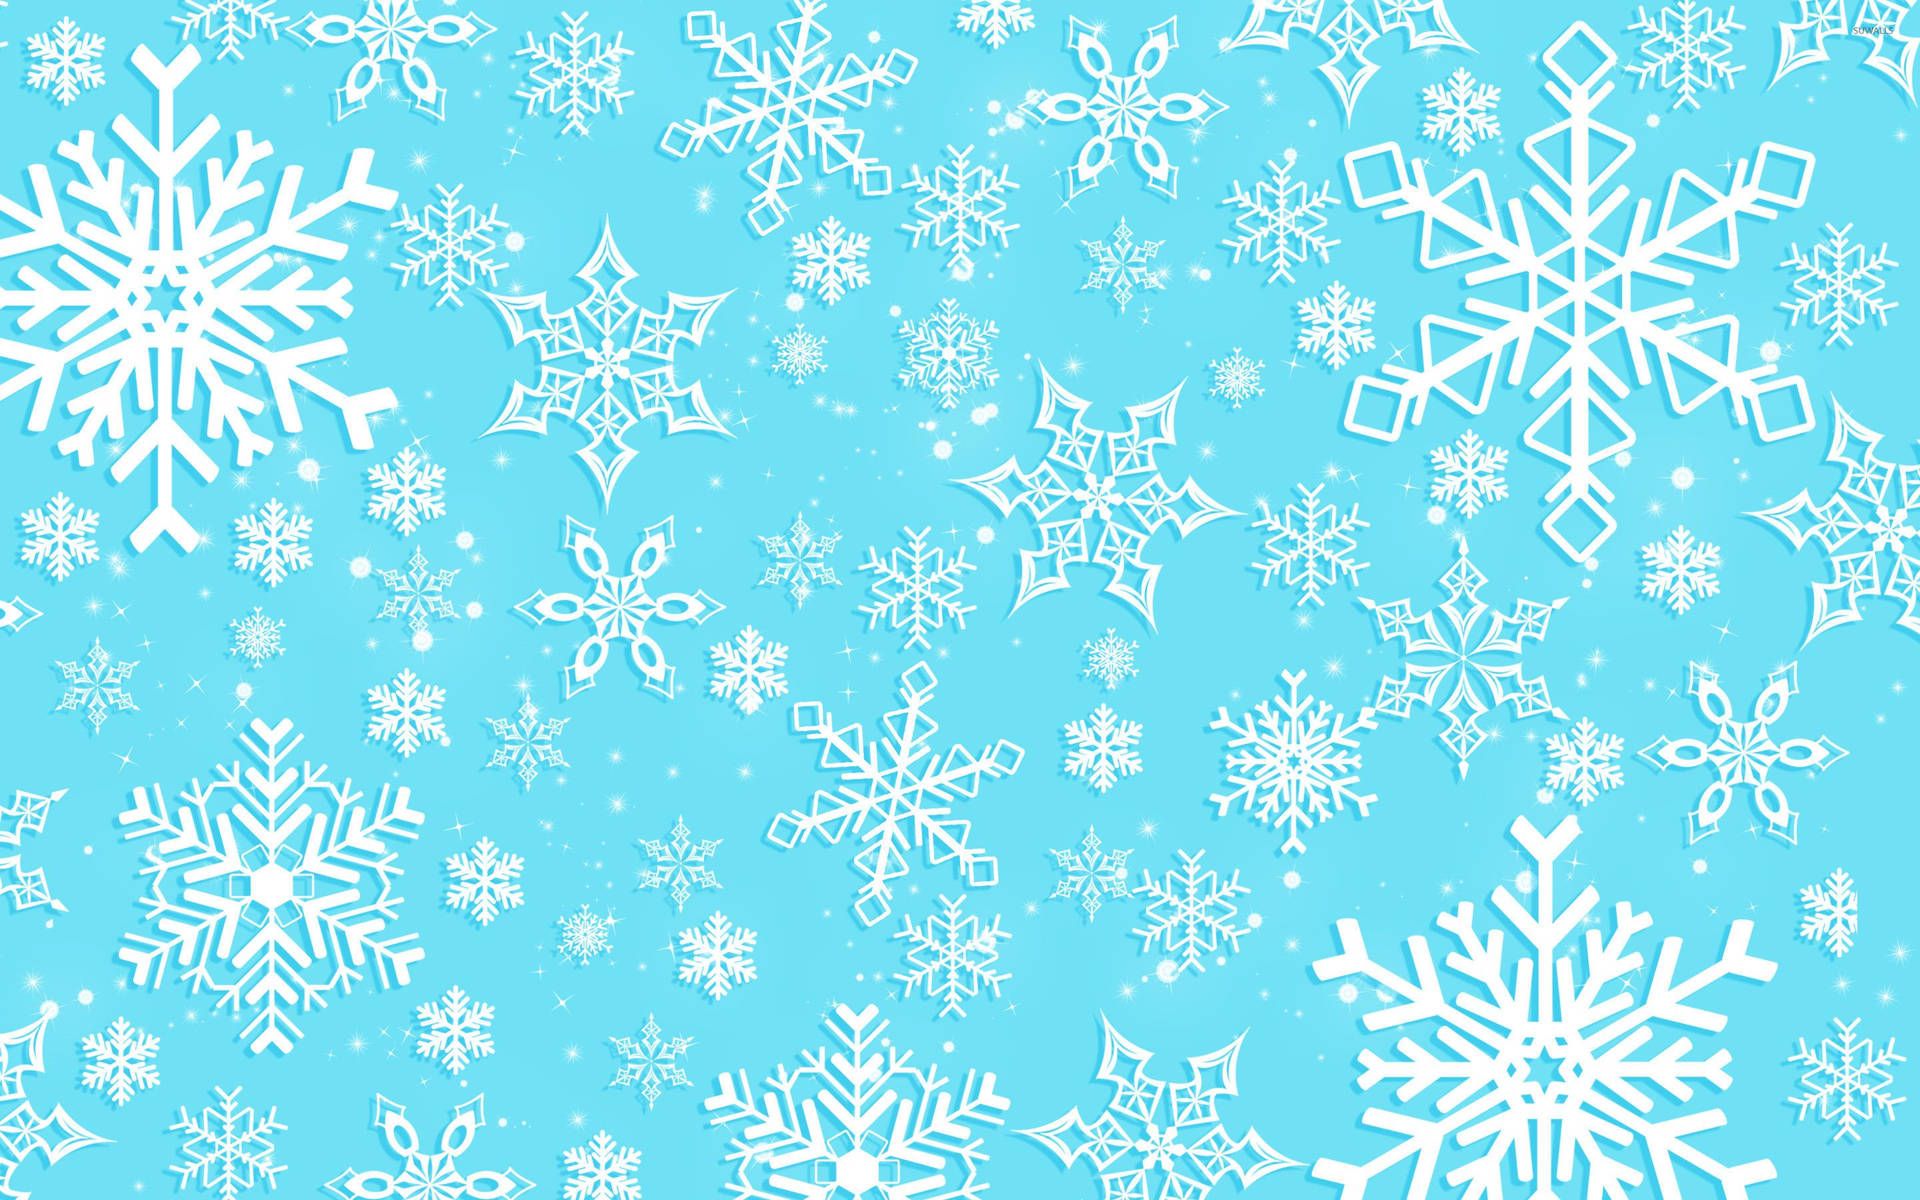 Free Snowflake Wallpaper Downloads, Snowflake Wallpaper for FREE